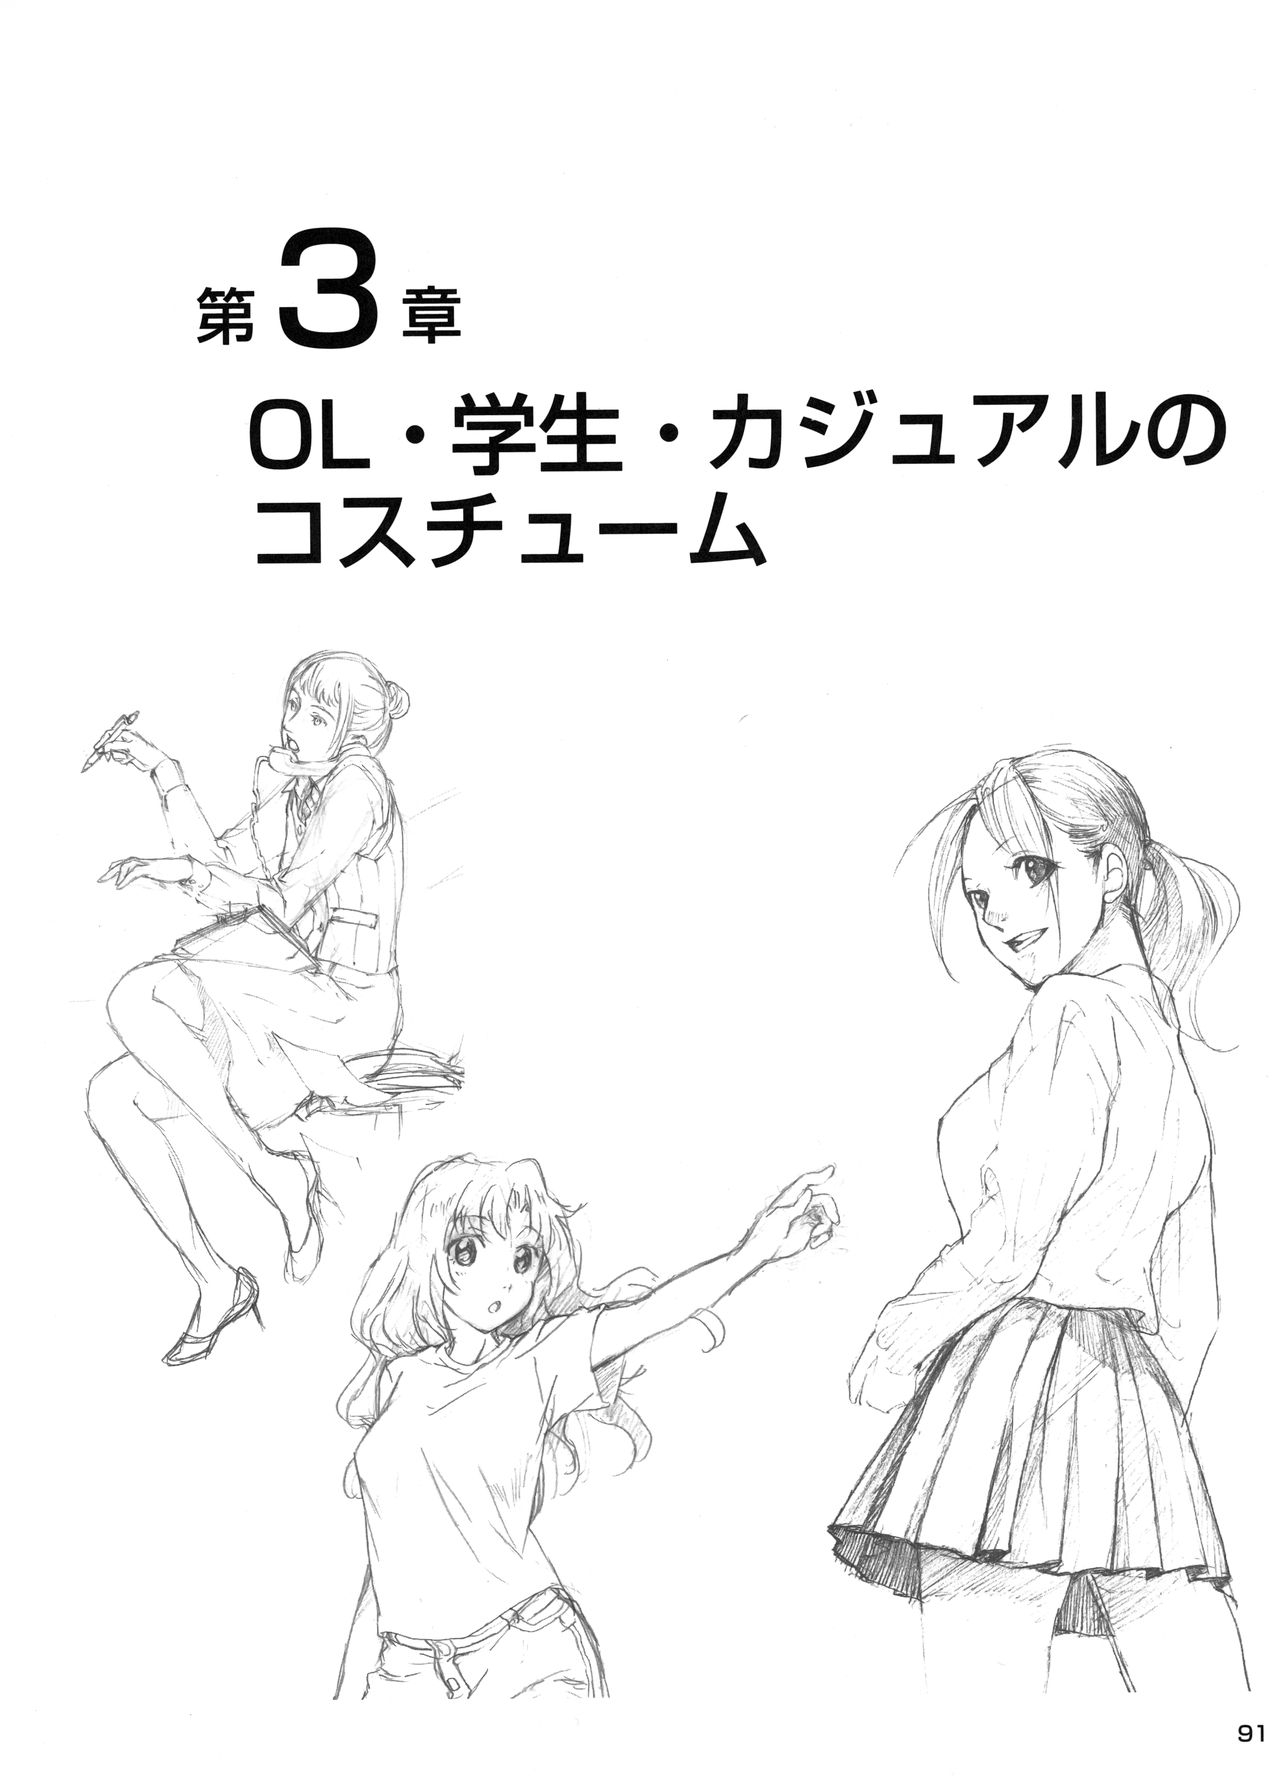 Manga no Kiso Dessin - Onnanoko Costume hen 91